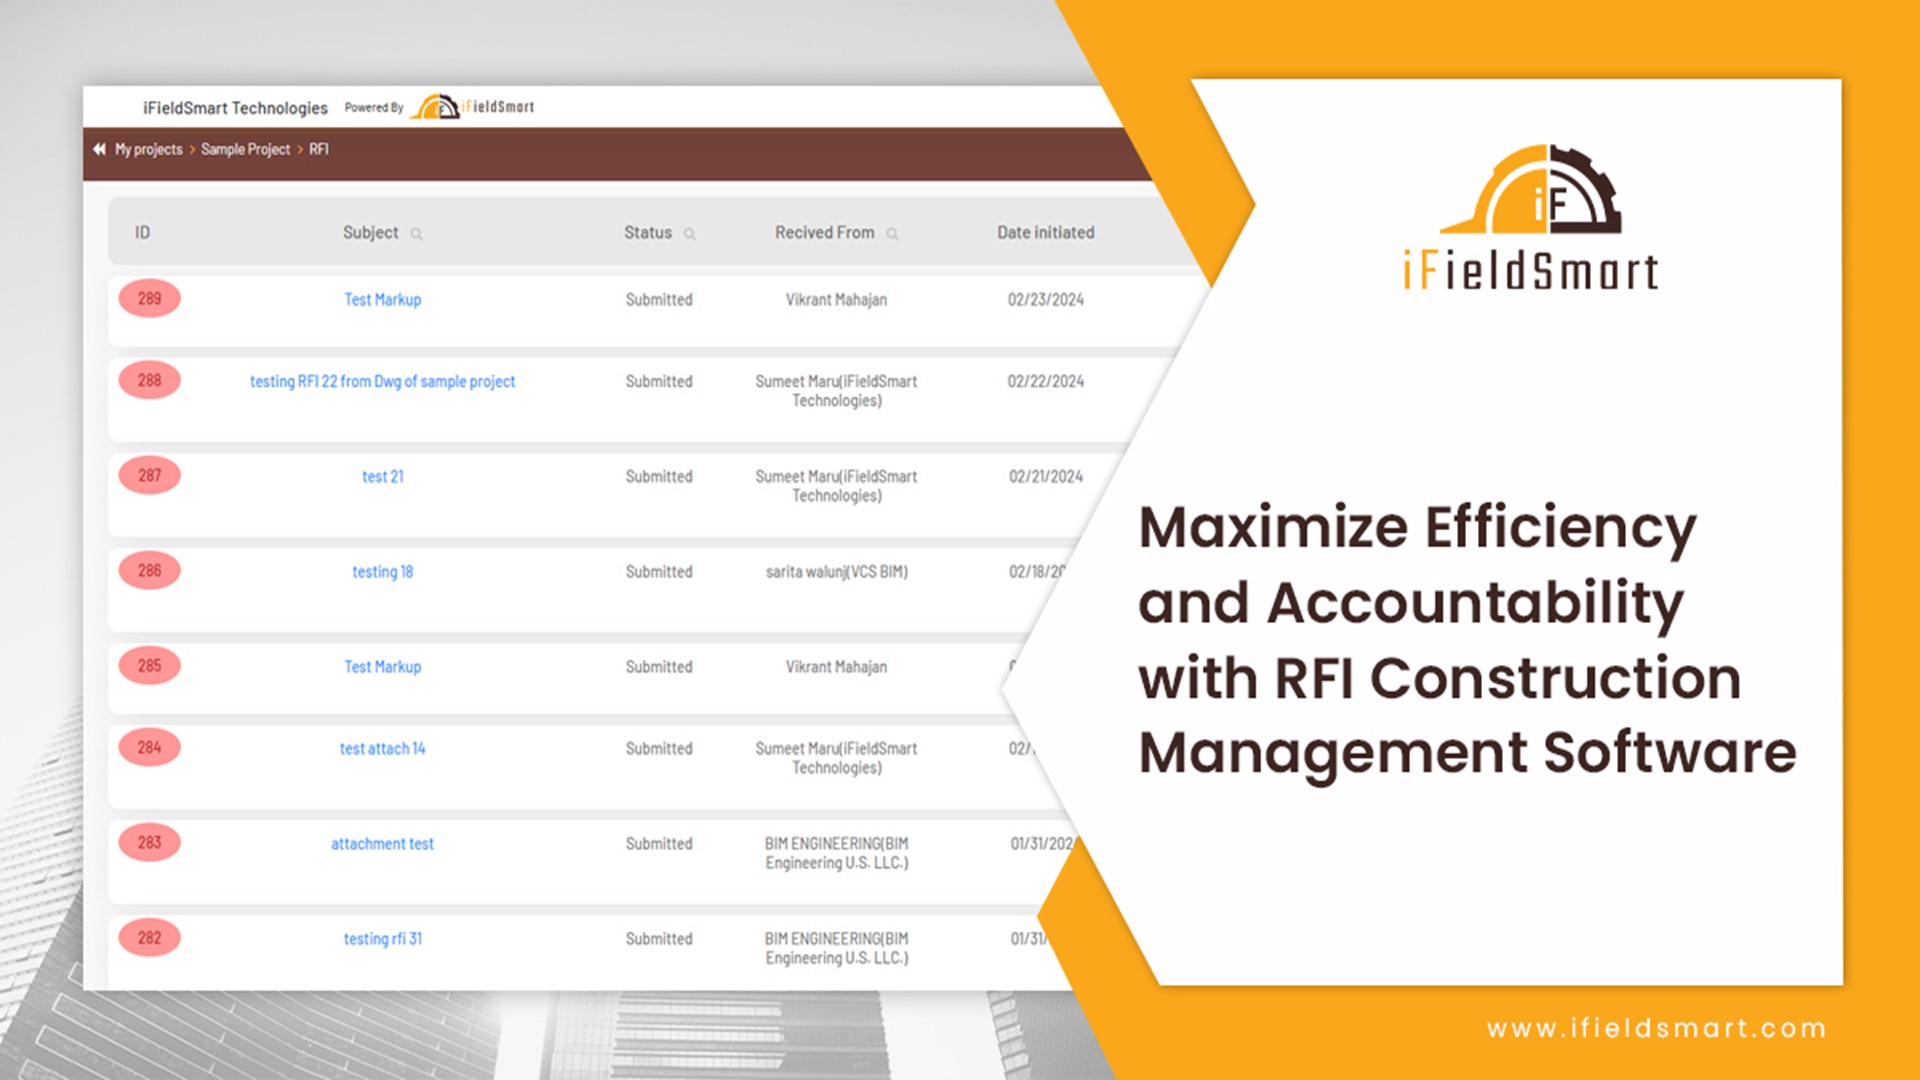 RFI Construction Management Software